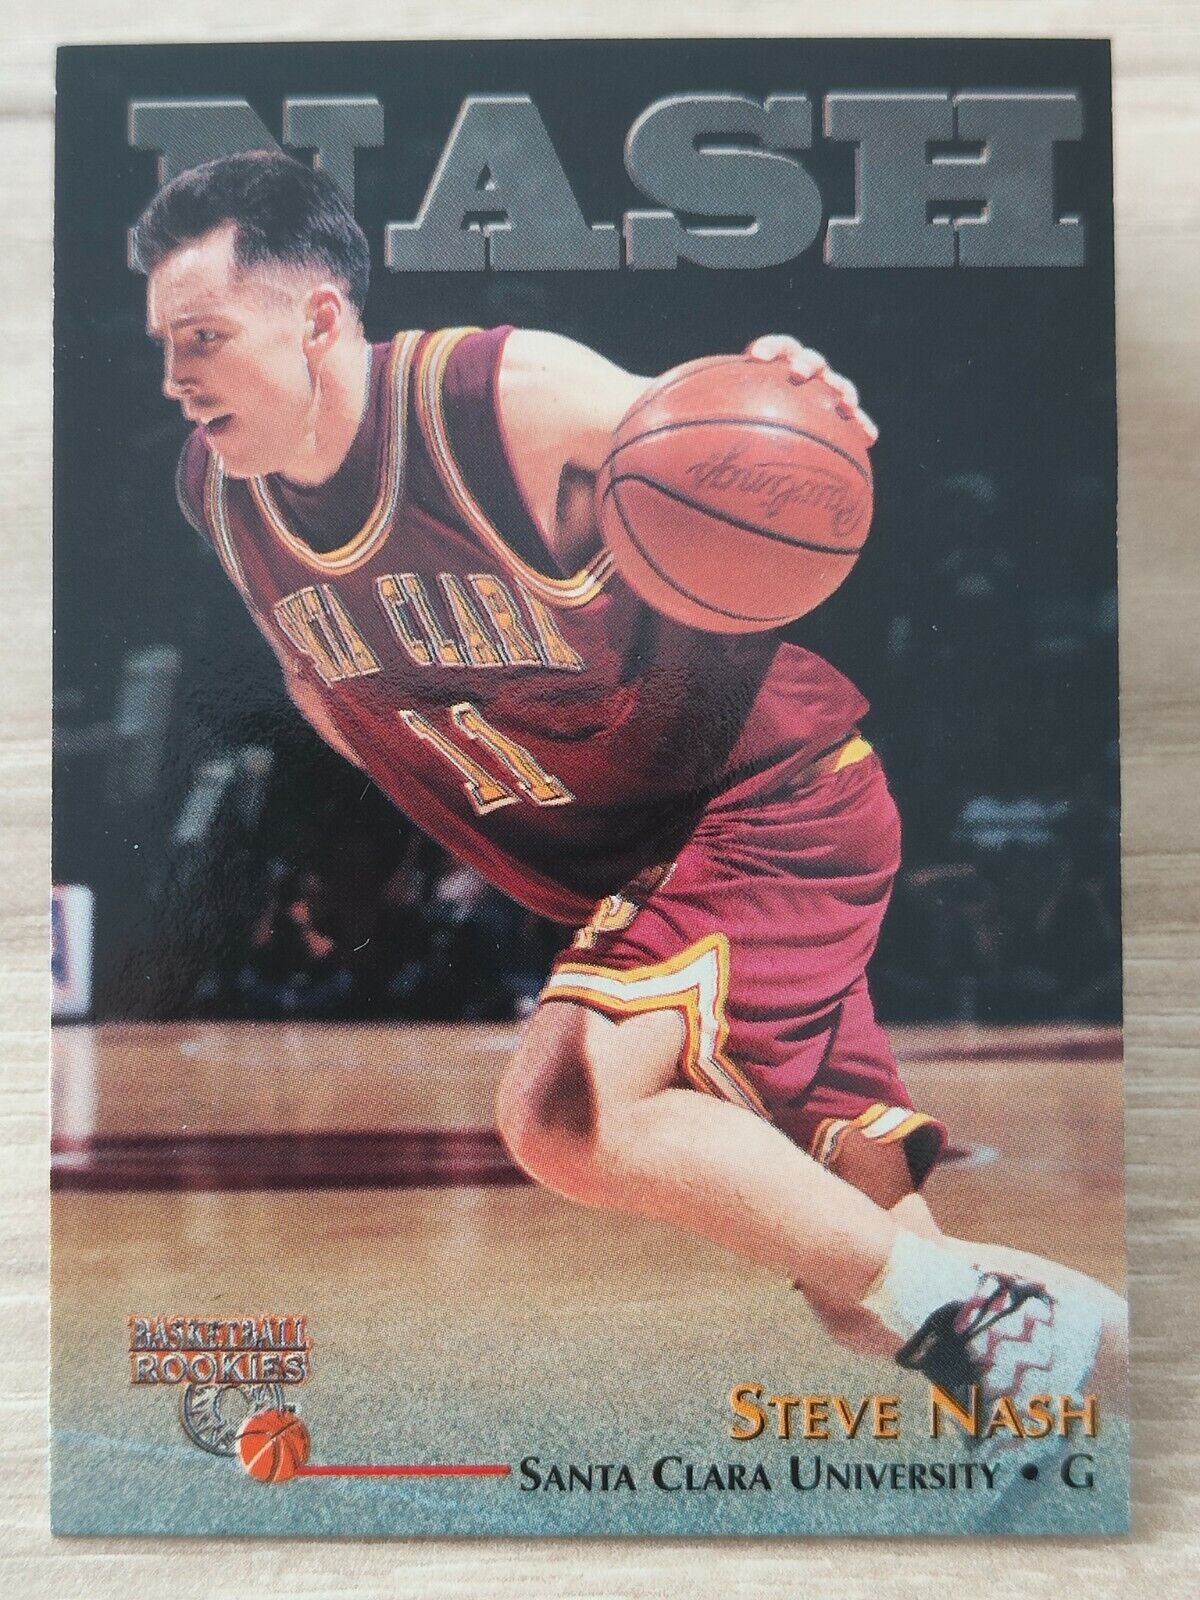 1996-97 N40 Score Board Car Basketball Rookies RC Steve Nash #18